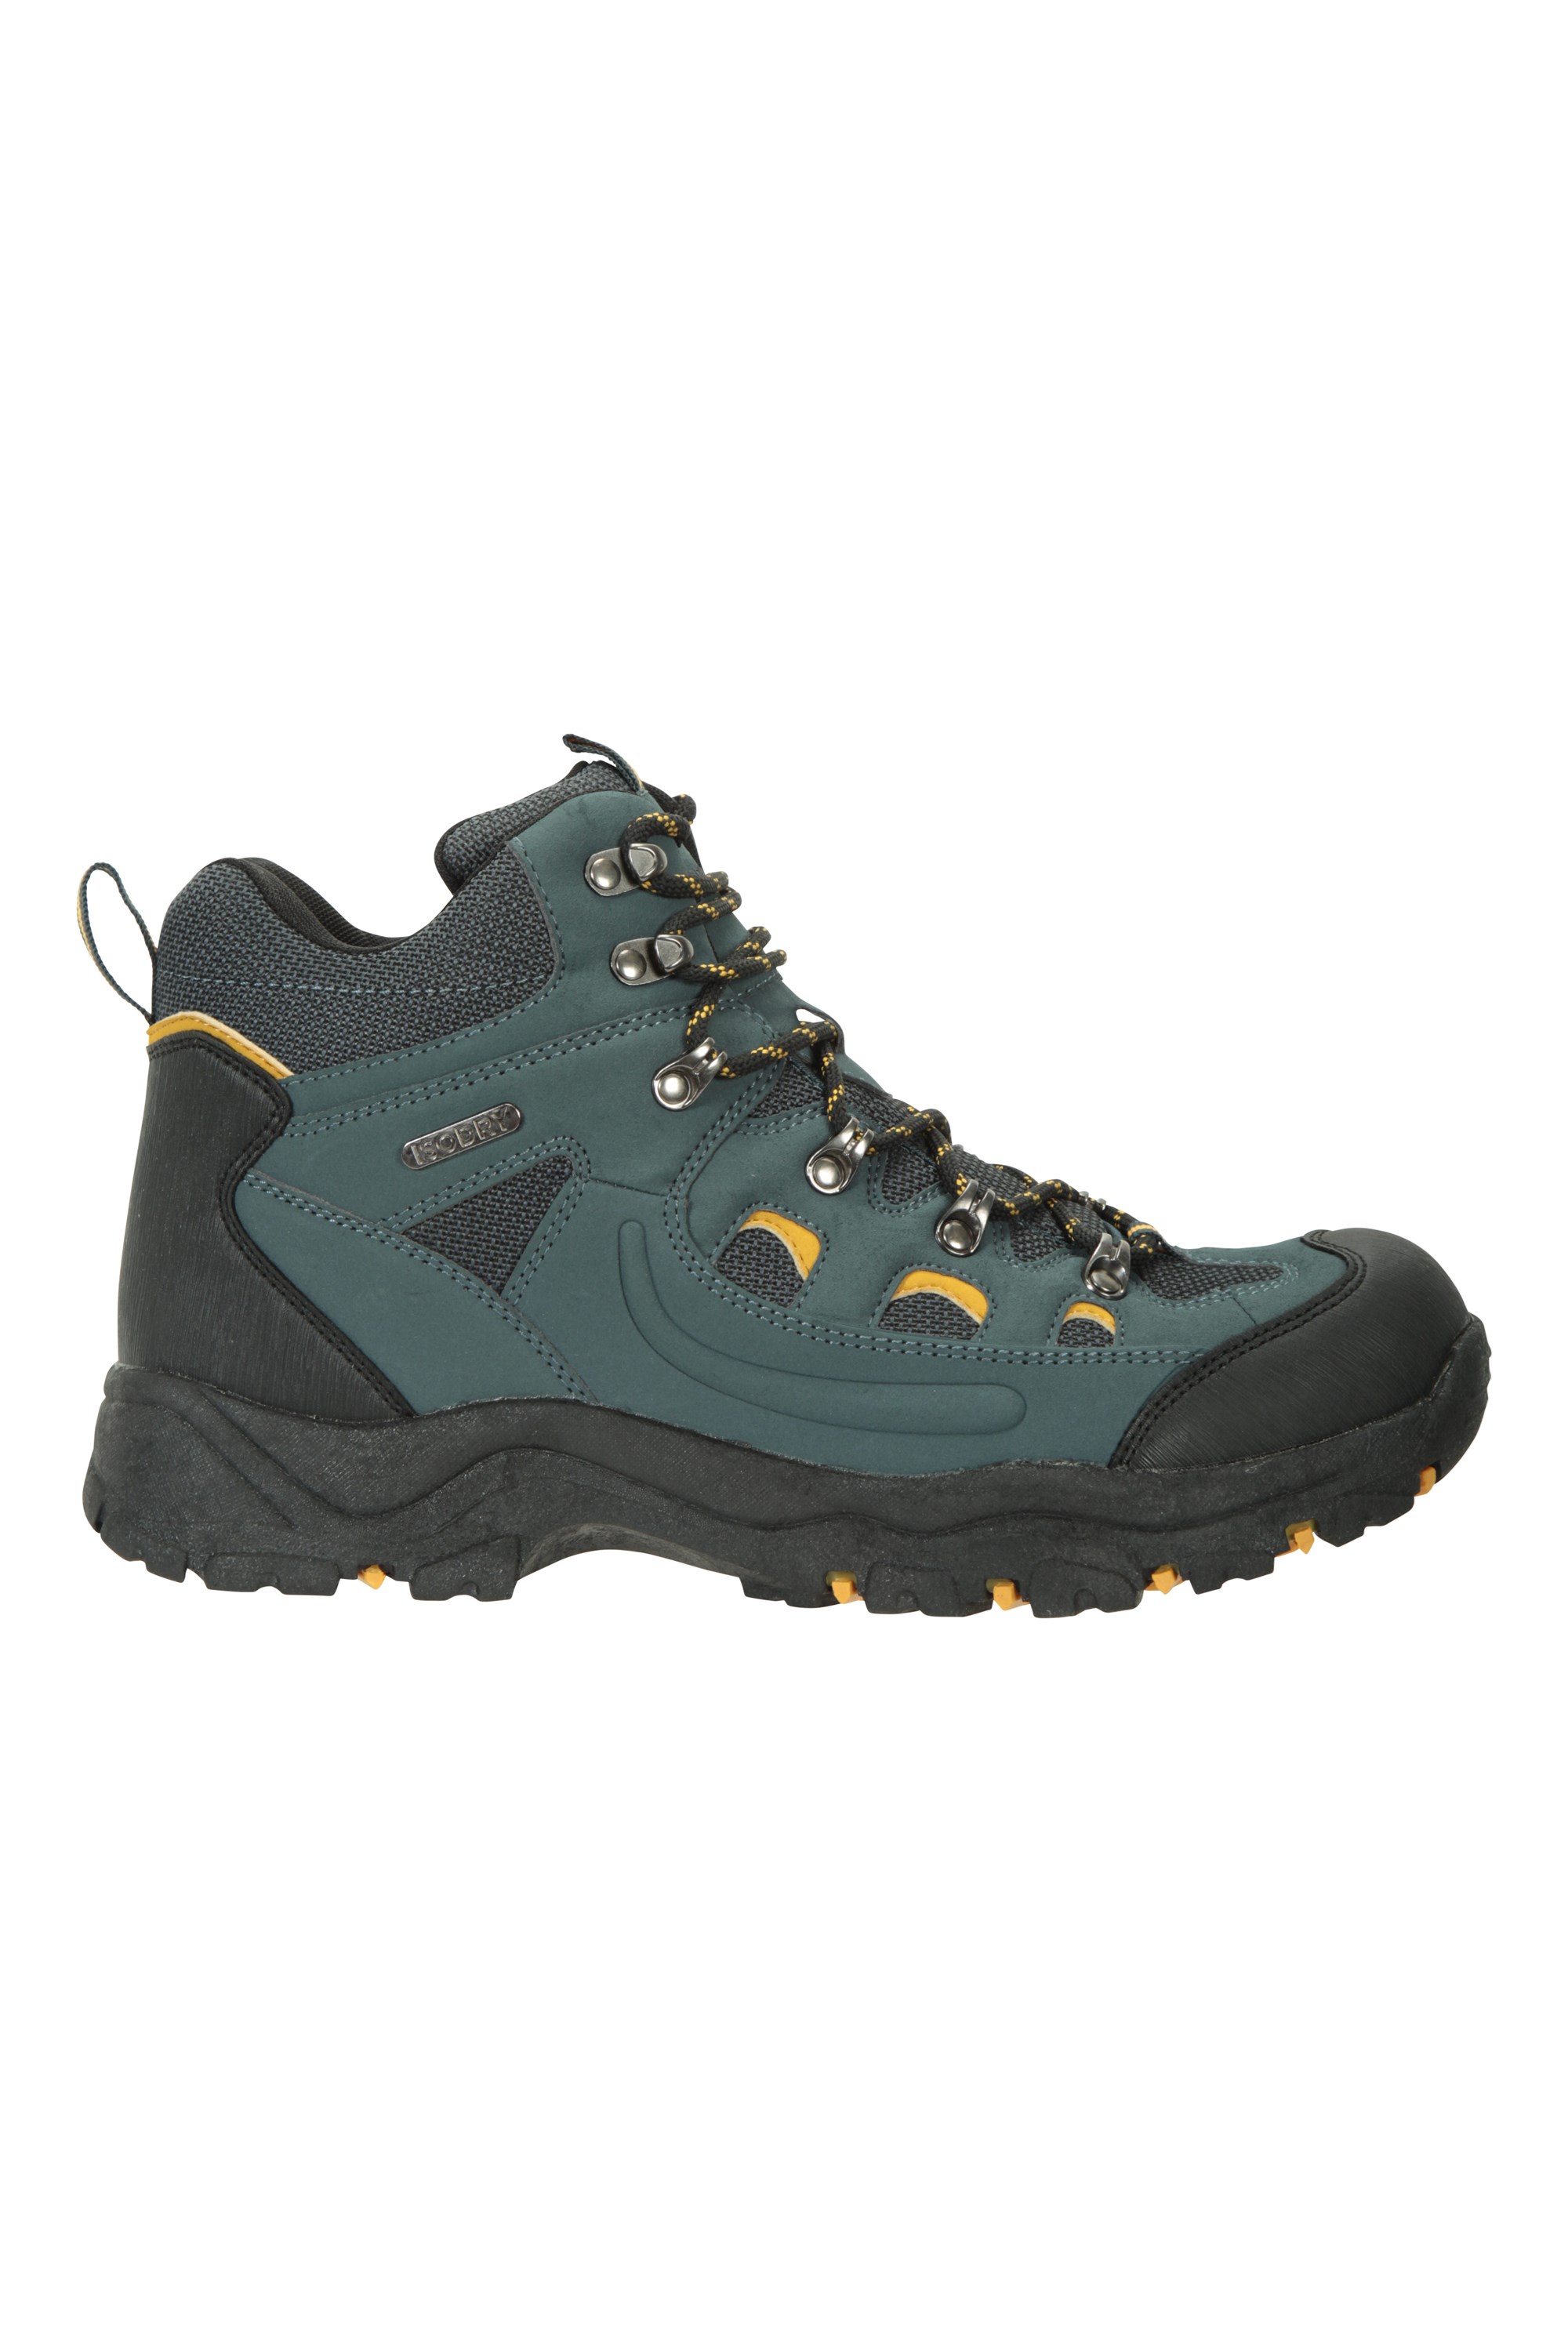 Mountain Warehouse Adventurer Mens Waterproof Hiking Boots 